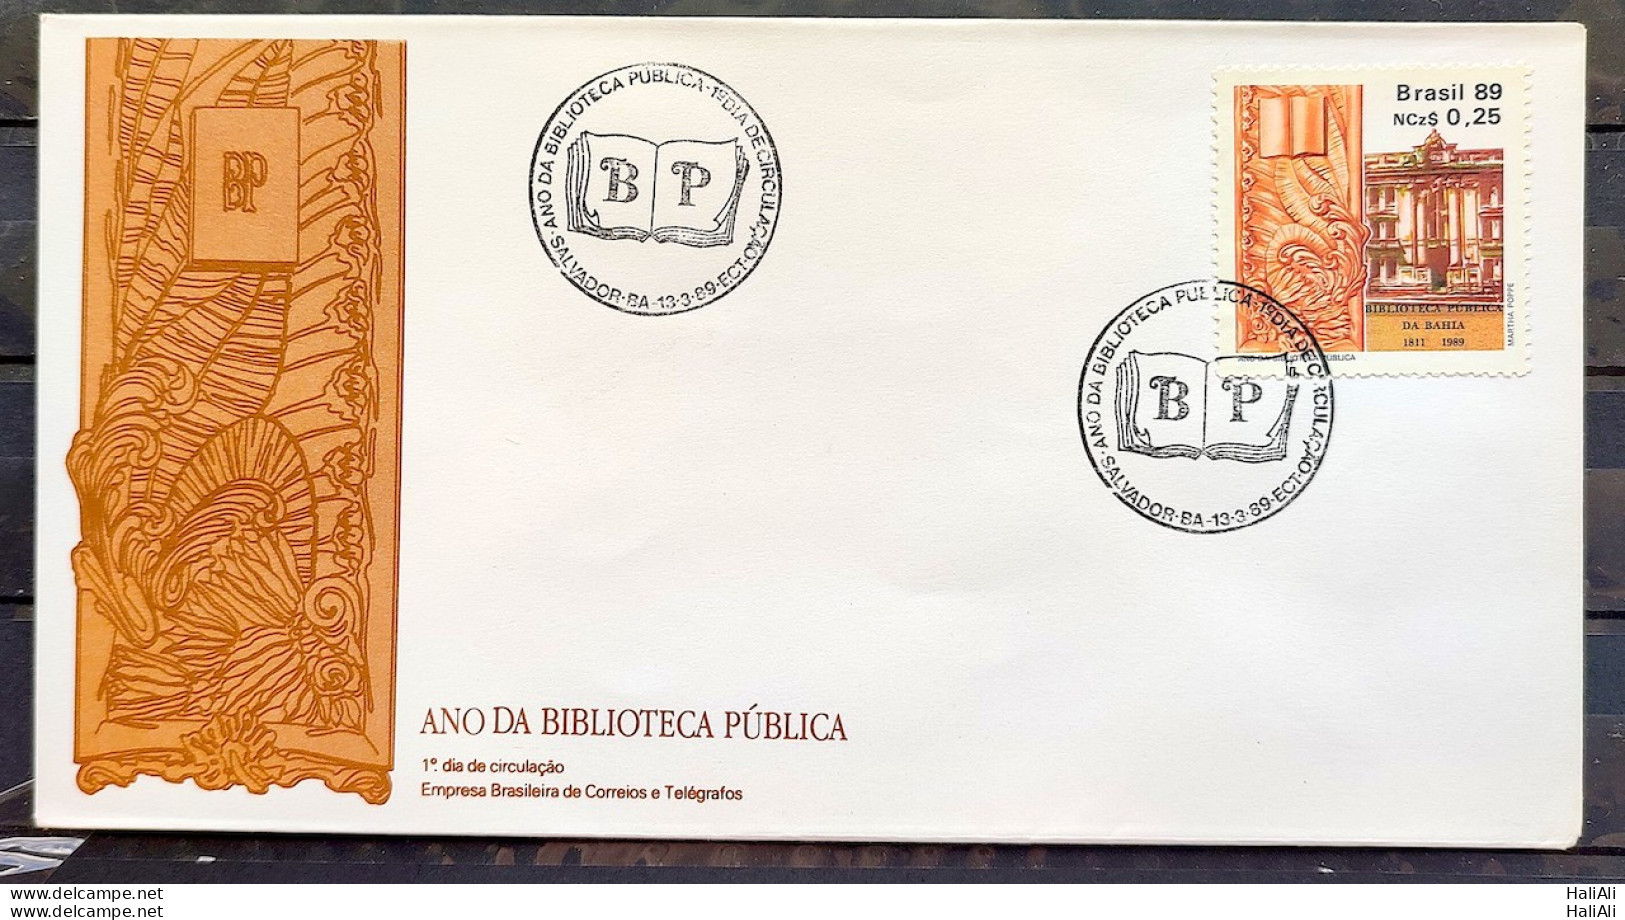 Brazil Envelope FDC 463 1989 Library Publics Bahia Literature EDUCATION CBC BA 01 - FDC